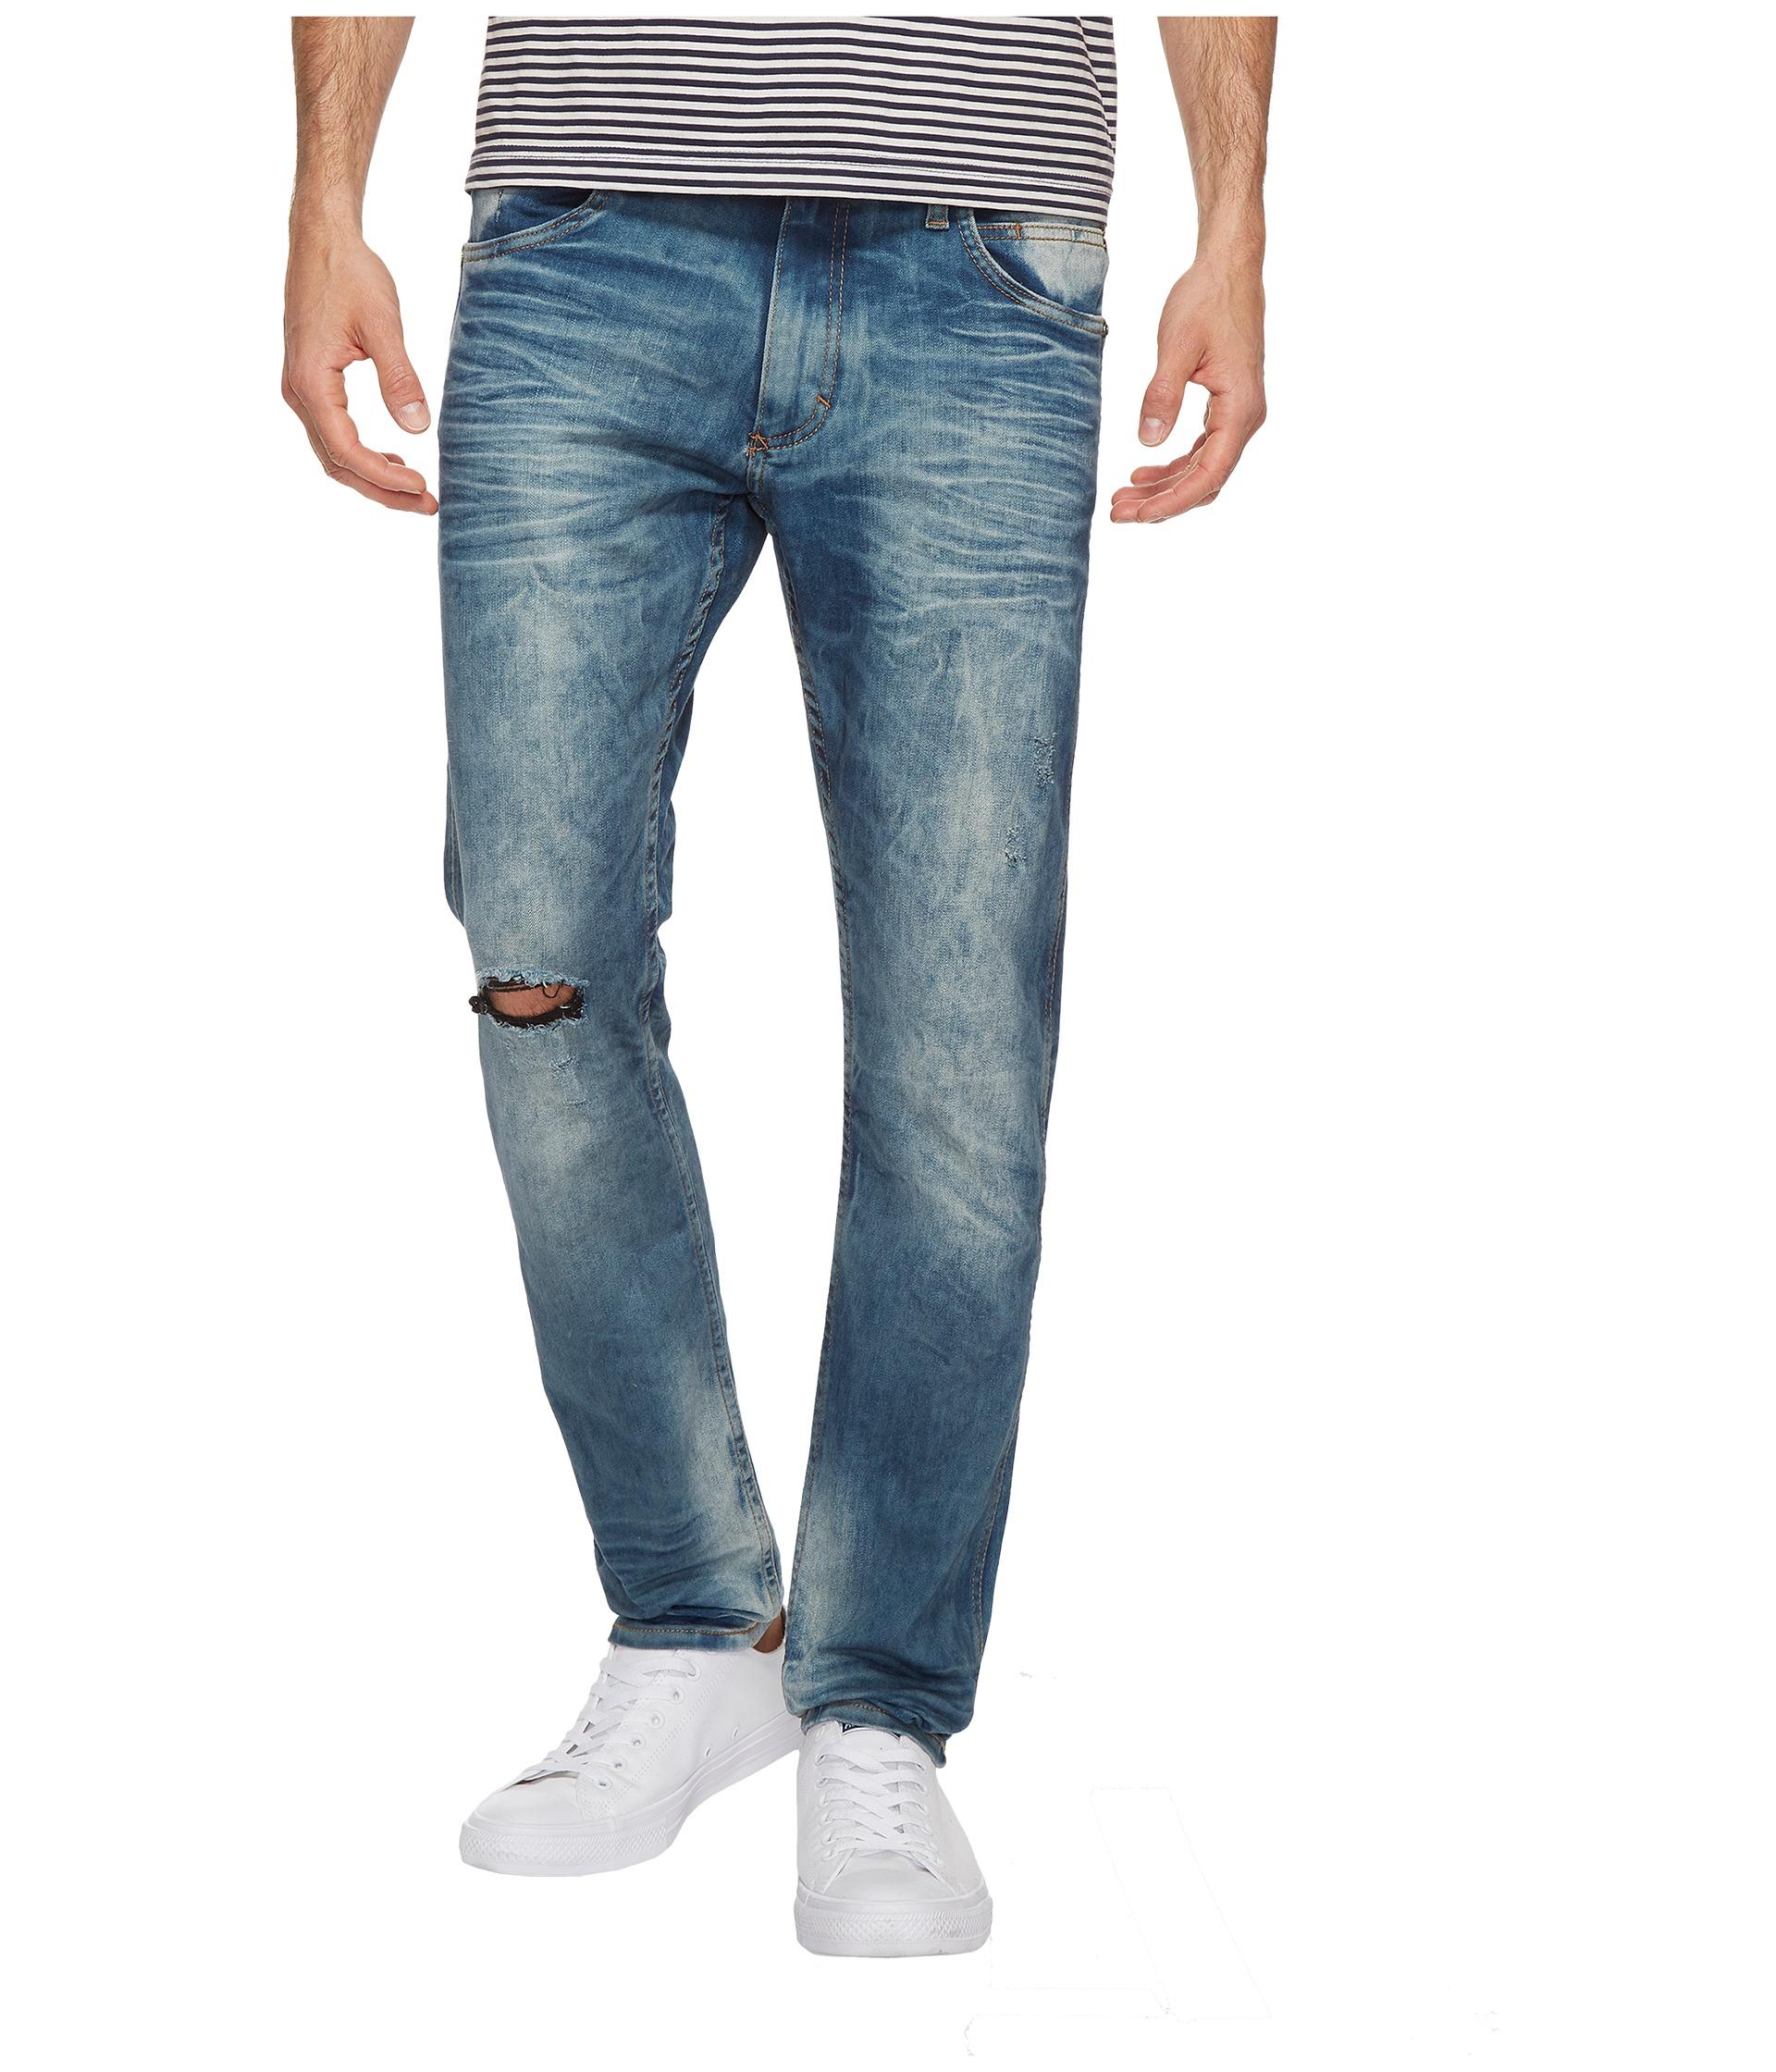 Calvin Klein Denim Sculpted Slim Jeans In Postal Blue Wash for Men - Lyst